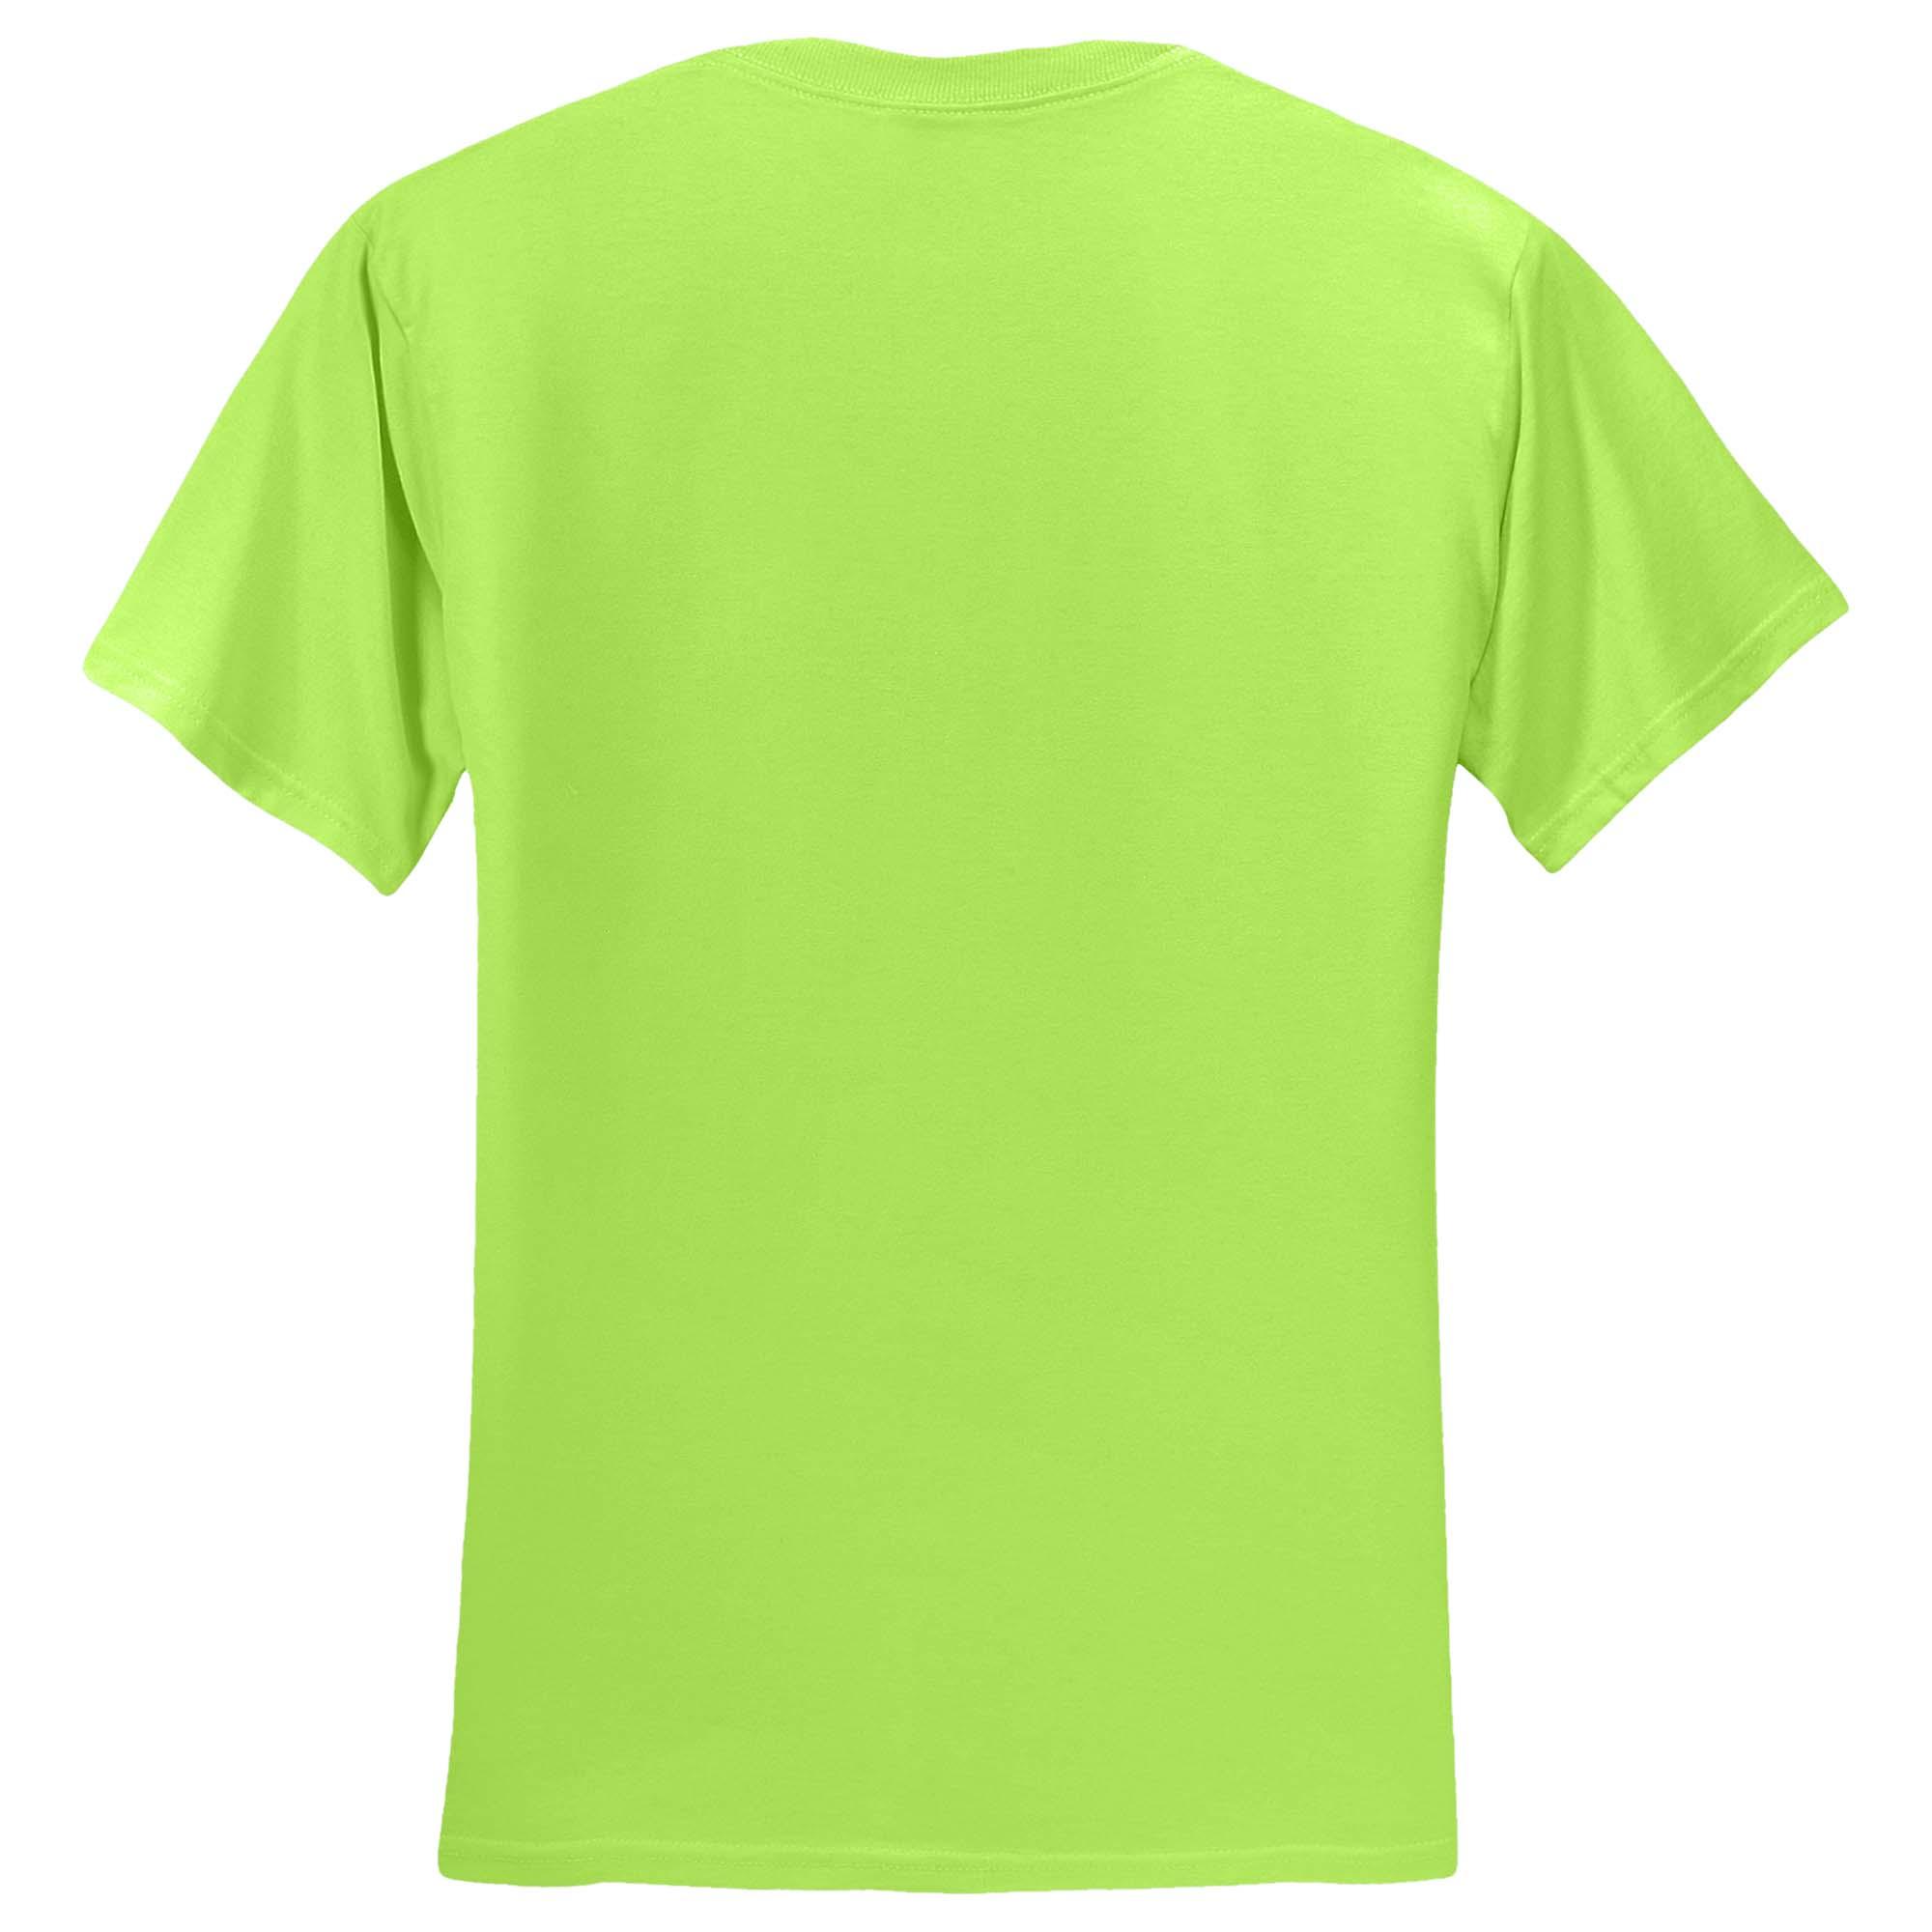 Buy > neon green dri fit shirts > in stock